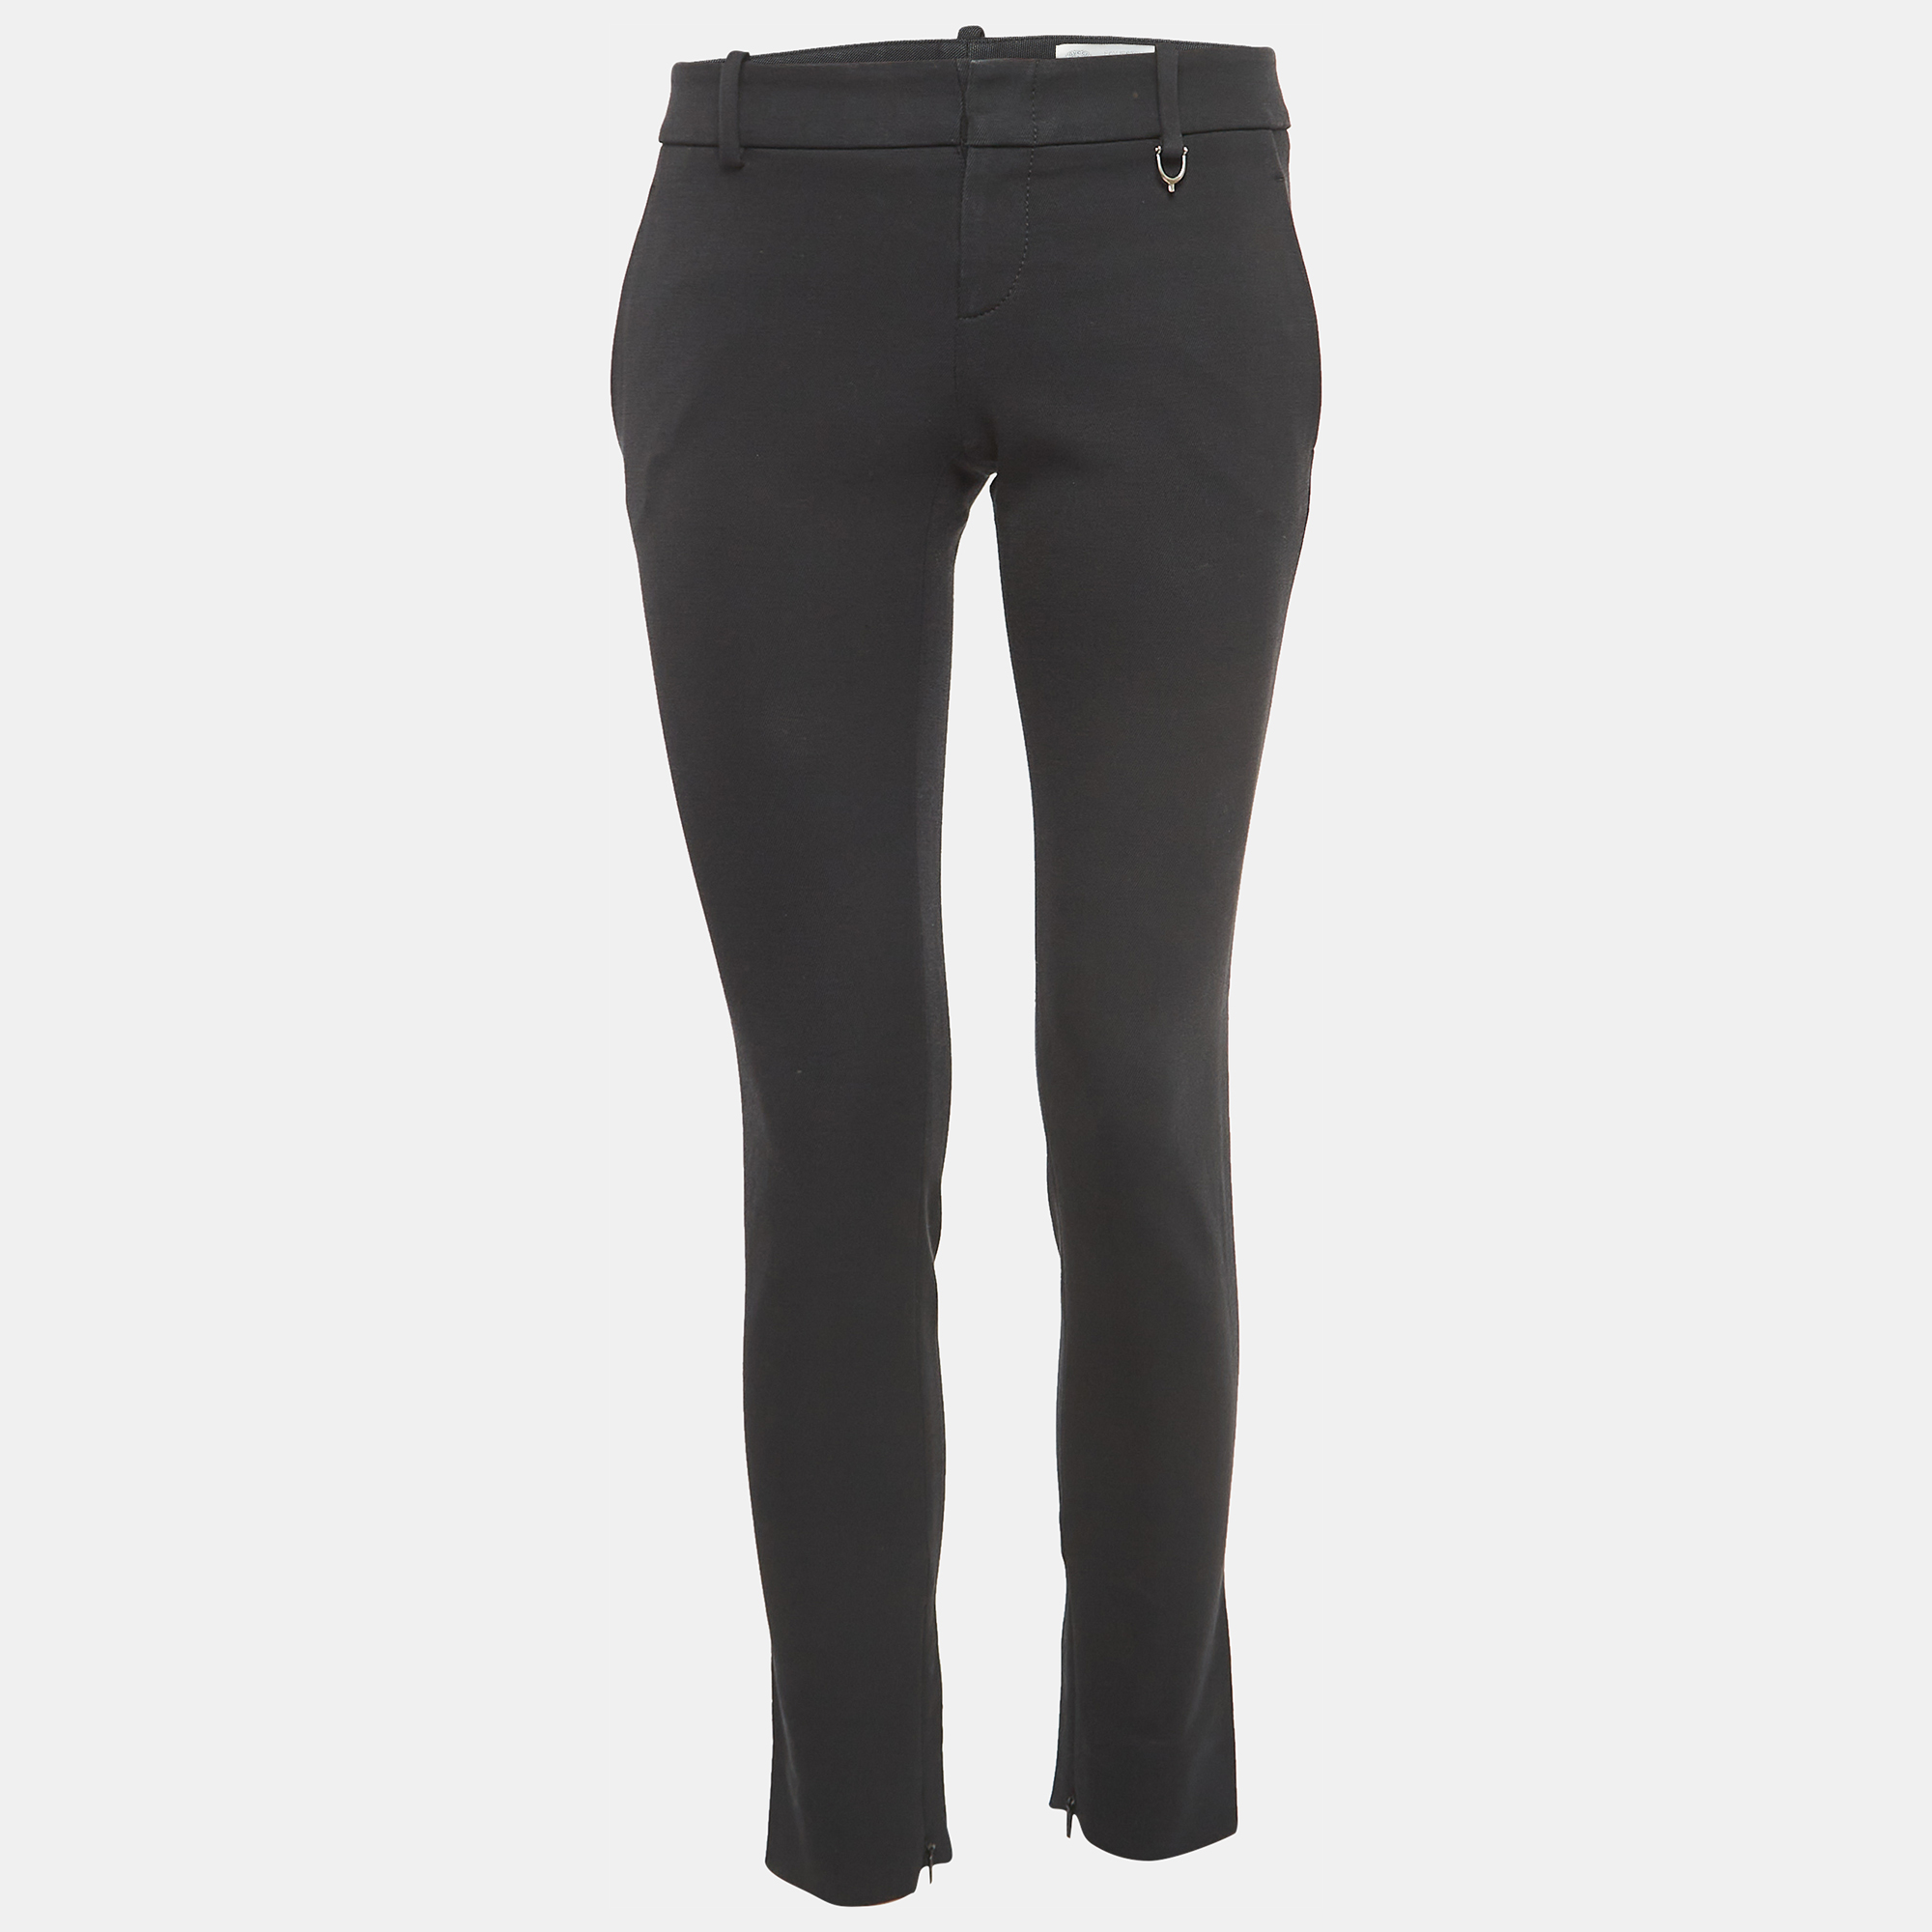 Gucci black cotton blend slim fit formal trousers s